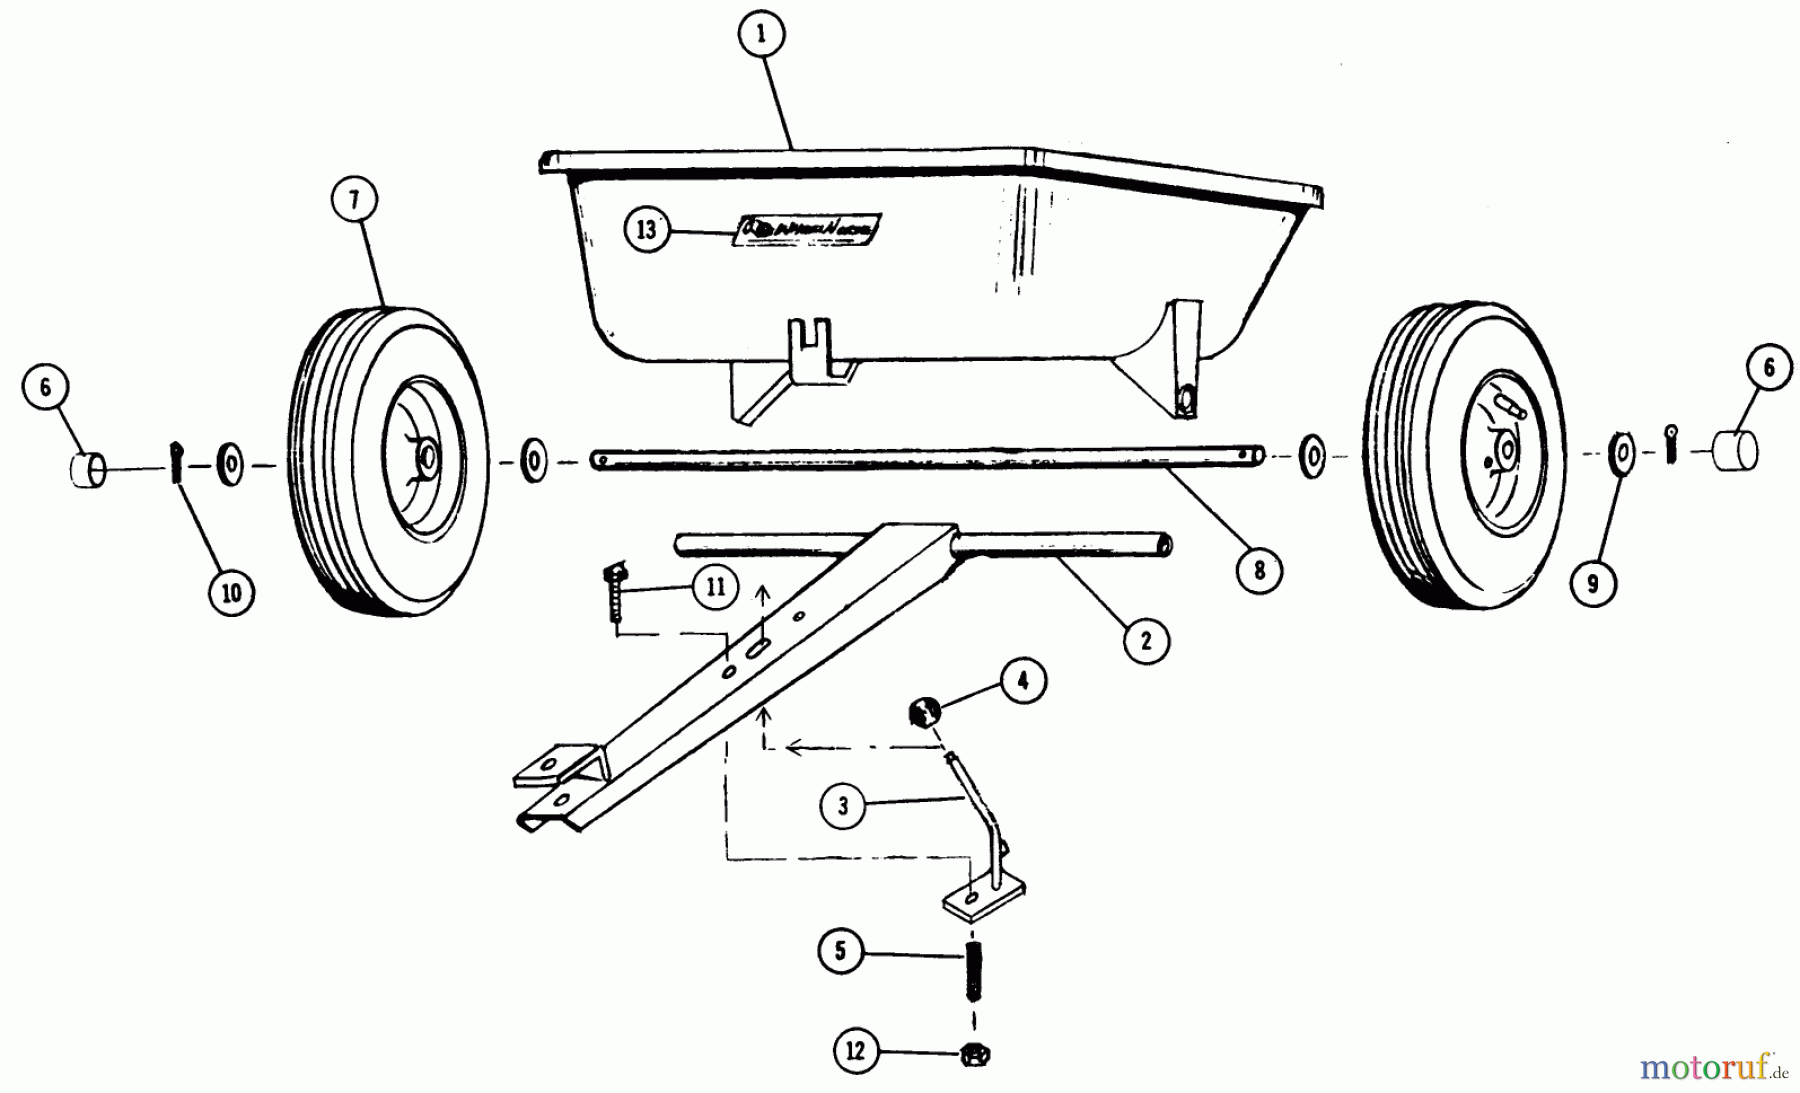  Toro Neu Utility Carts 7-2211 - Toro 2-Wheel Cart, 1970 PARTS LIST-DUMP TRAILER MODEL 7-2211 (FORMERLY LTD-244)